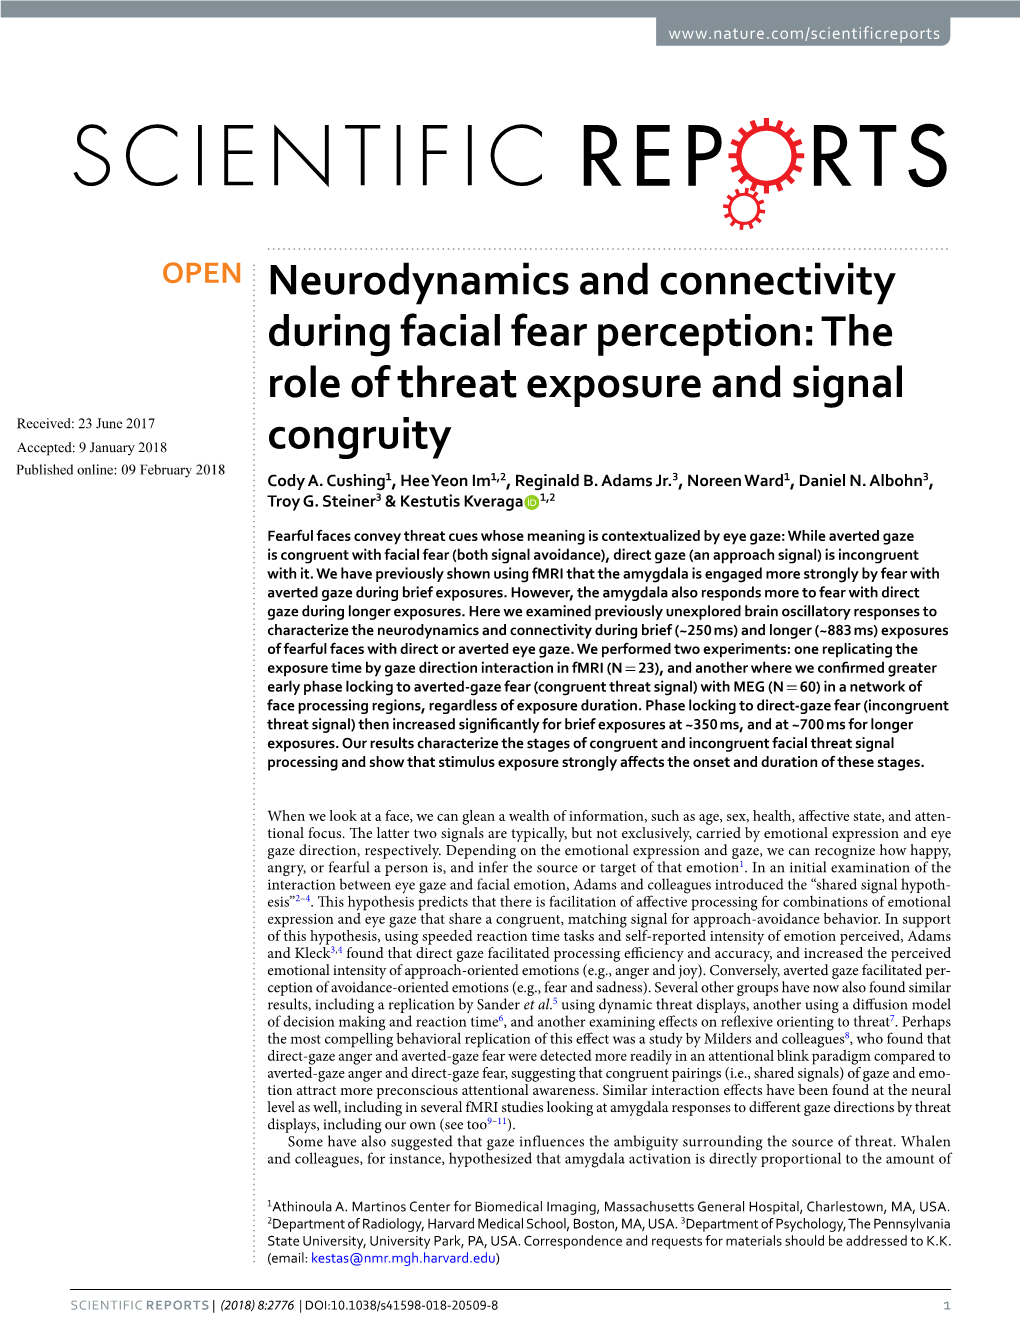 Neurodynamics and Connectivity During Facial Fear Perception